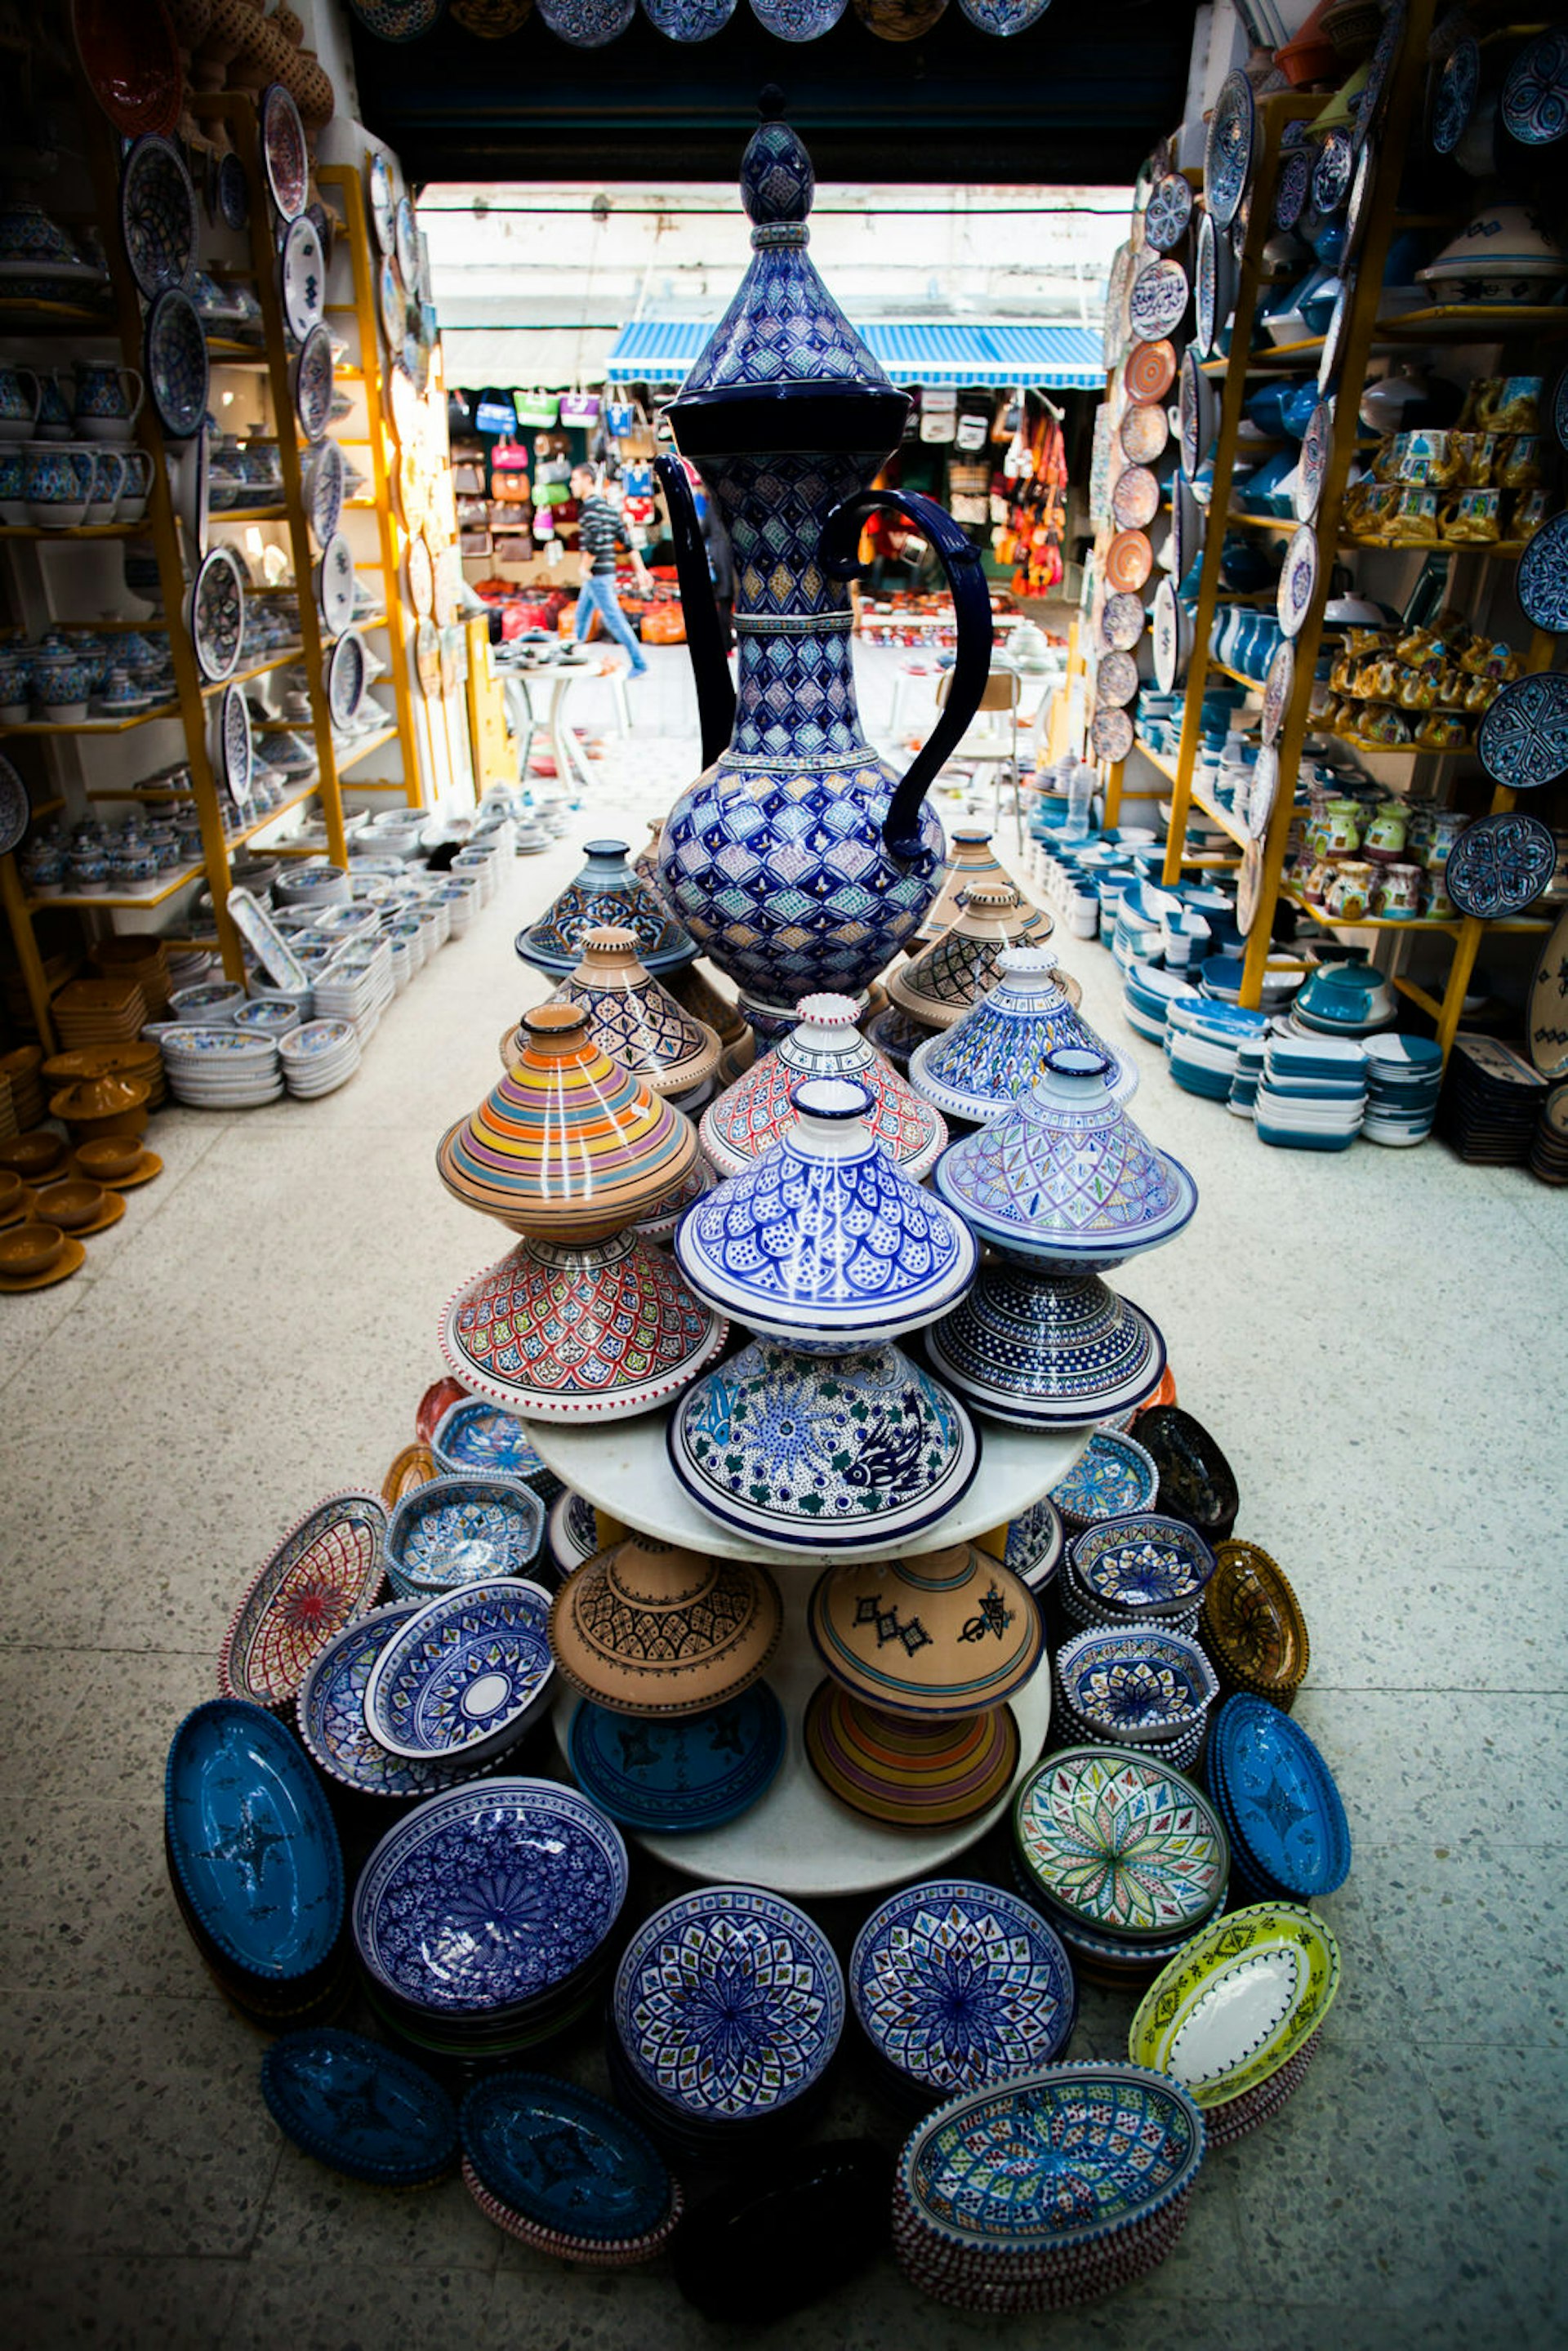 Ceramics on display in a shop in Nabeul, Cap Bon, Tunisia © Tancredi J. Bavosi / Getty Images